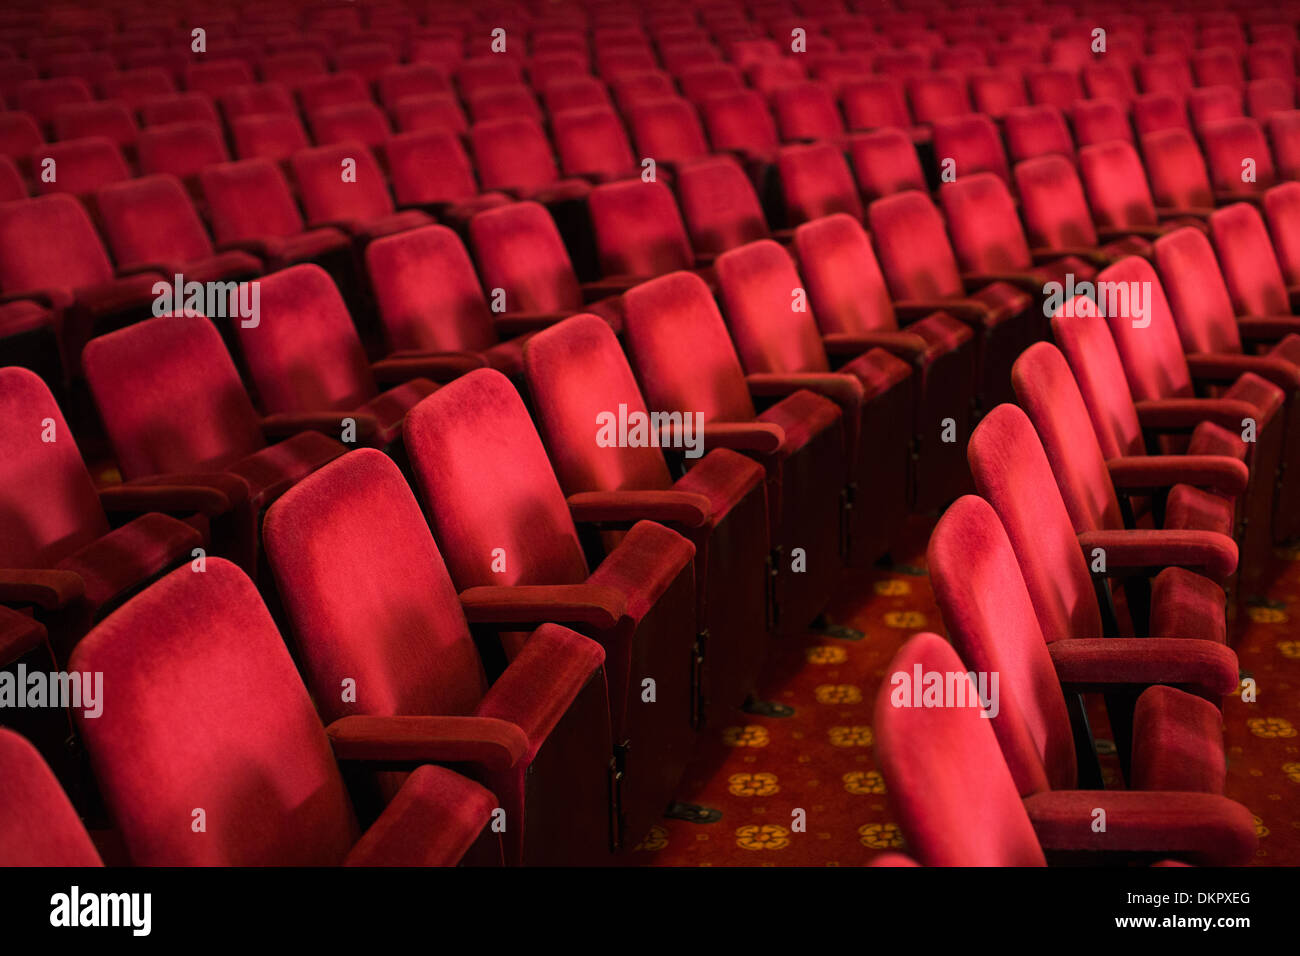 Empty seats in theater auditorium Stock Photo